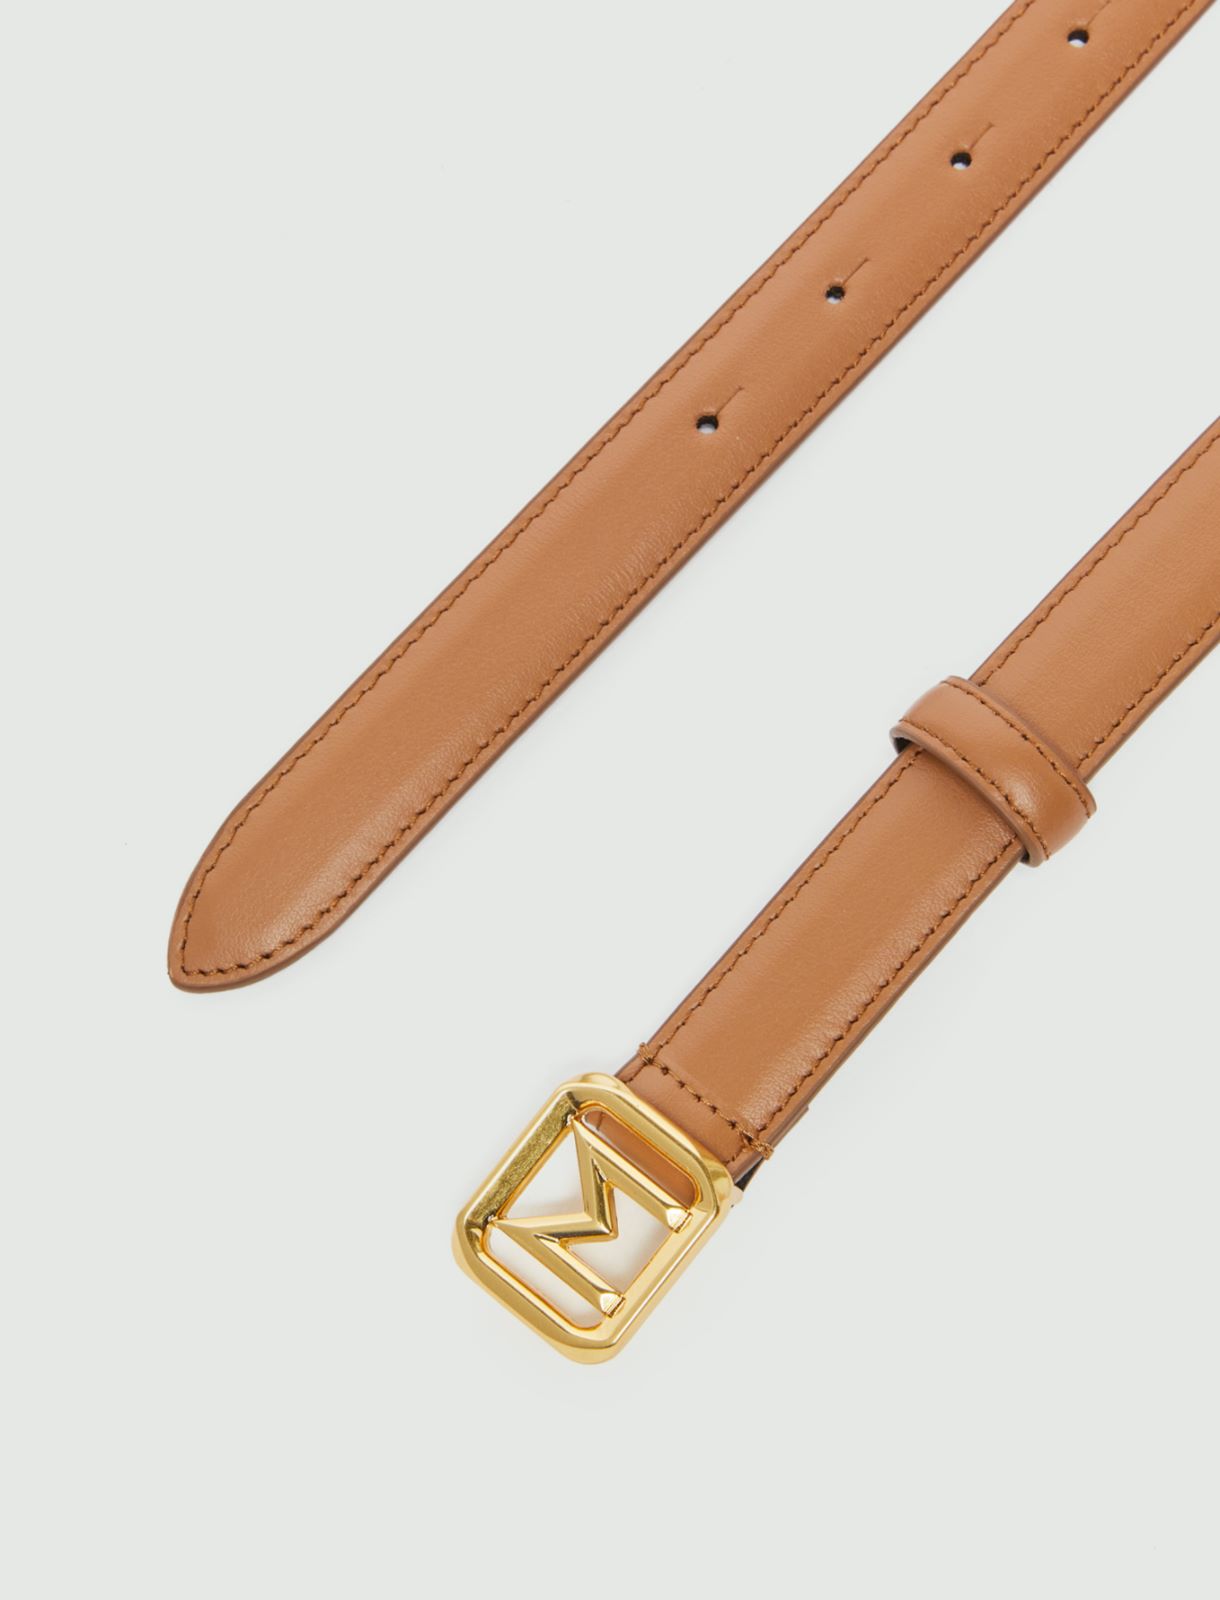 Leather belt - Camel - Marella - 2